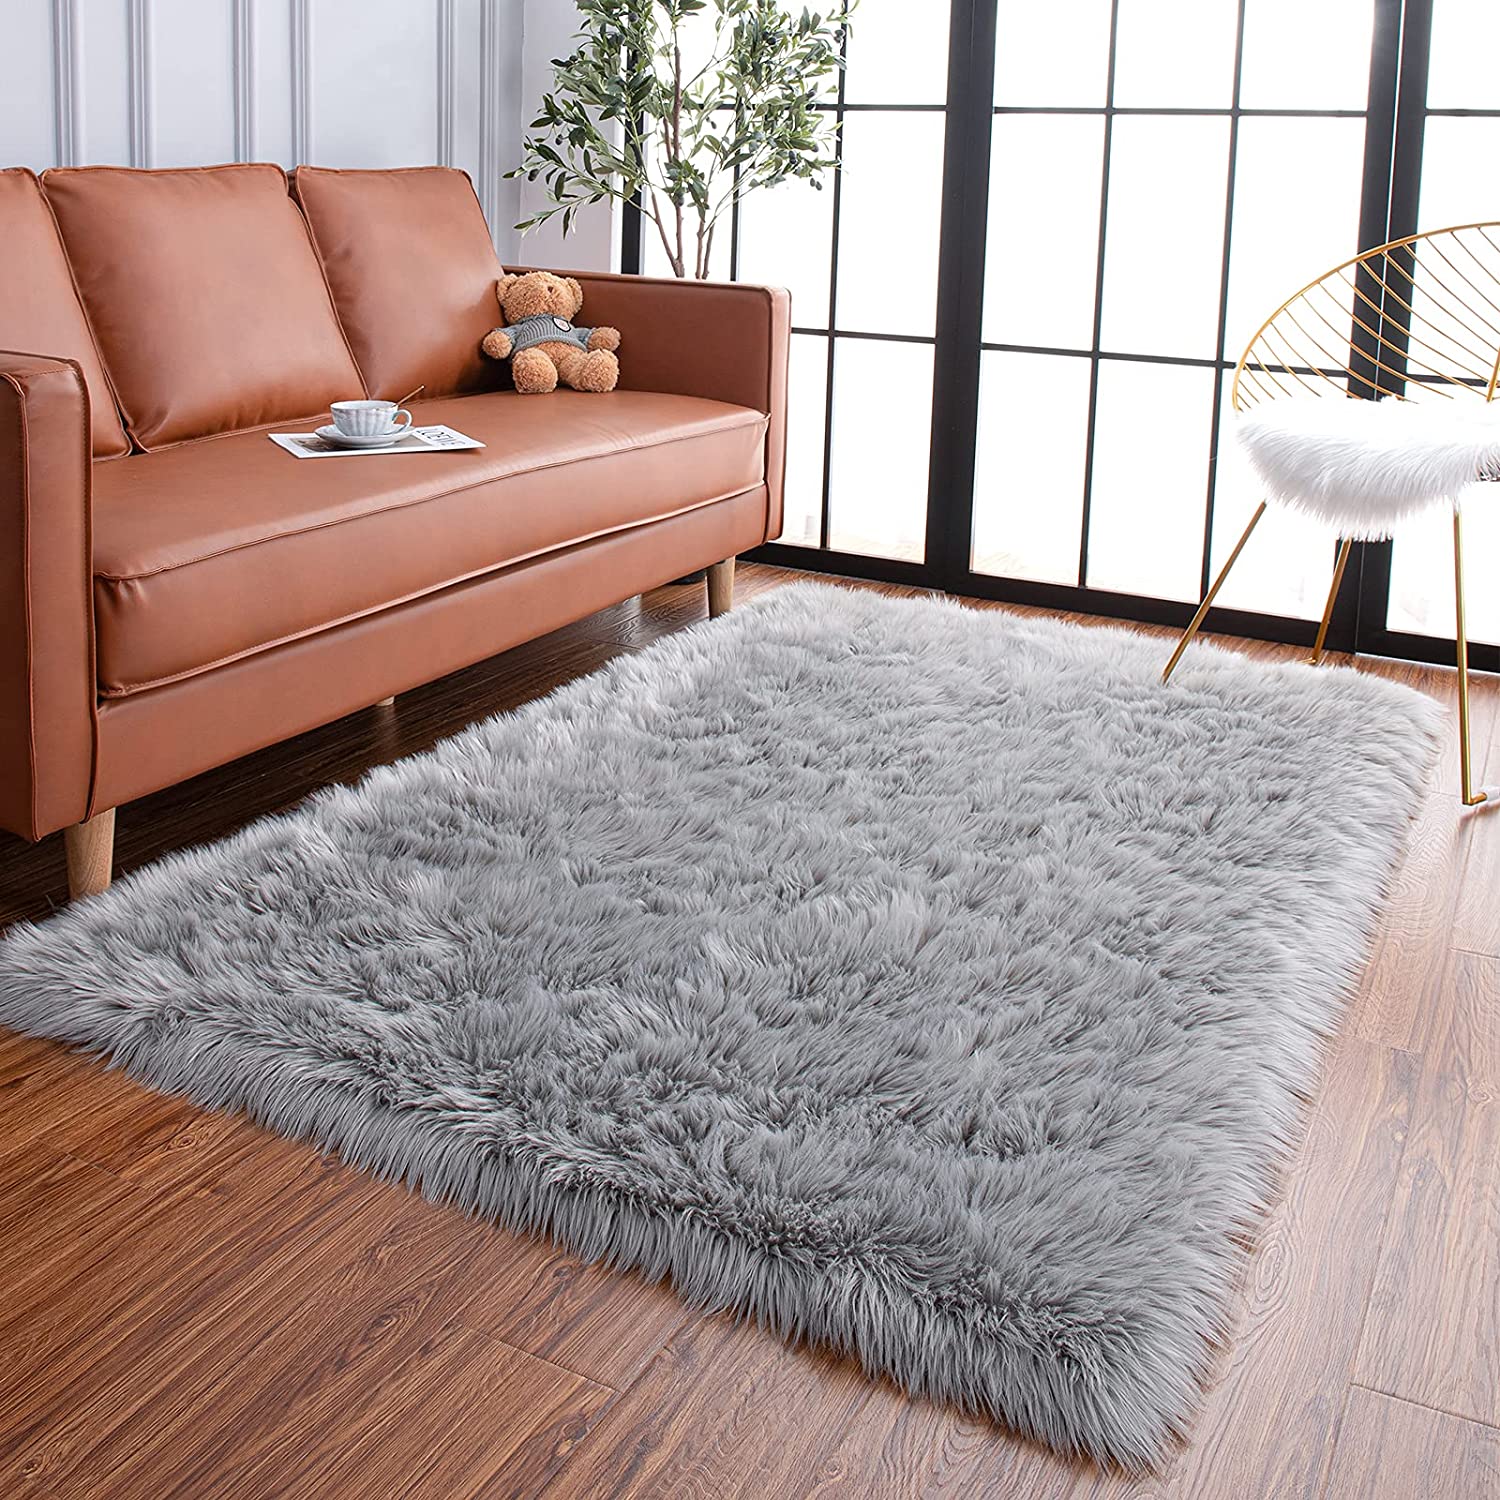 YJ.GWL Super Soft Faux Sheepskin Fur Area Rugs for Bedroom Floor Shaggy Plush 2 